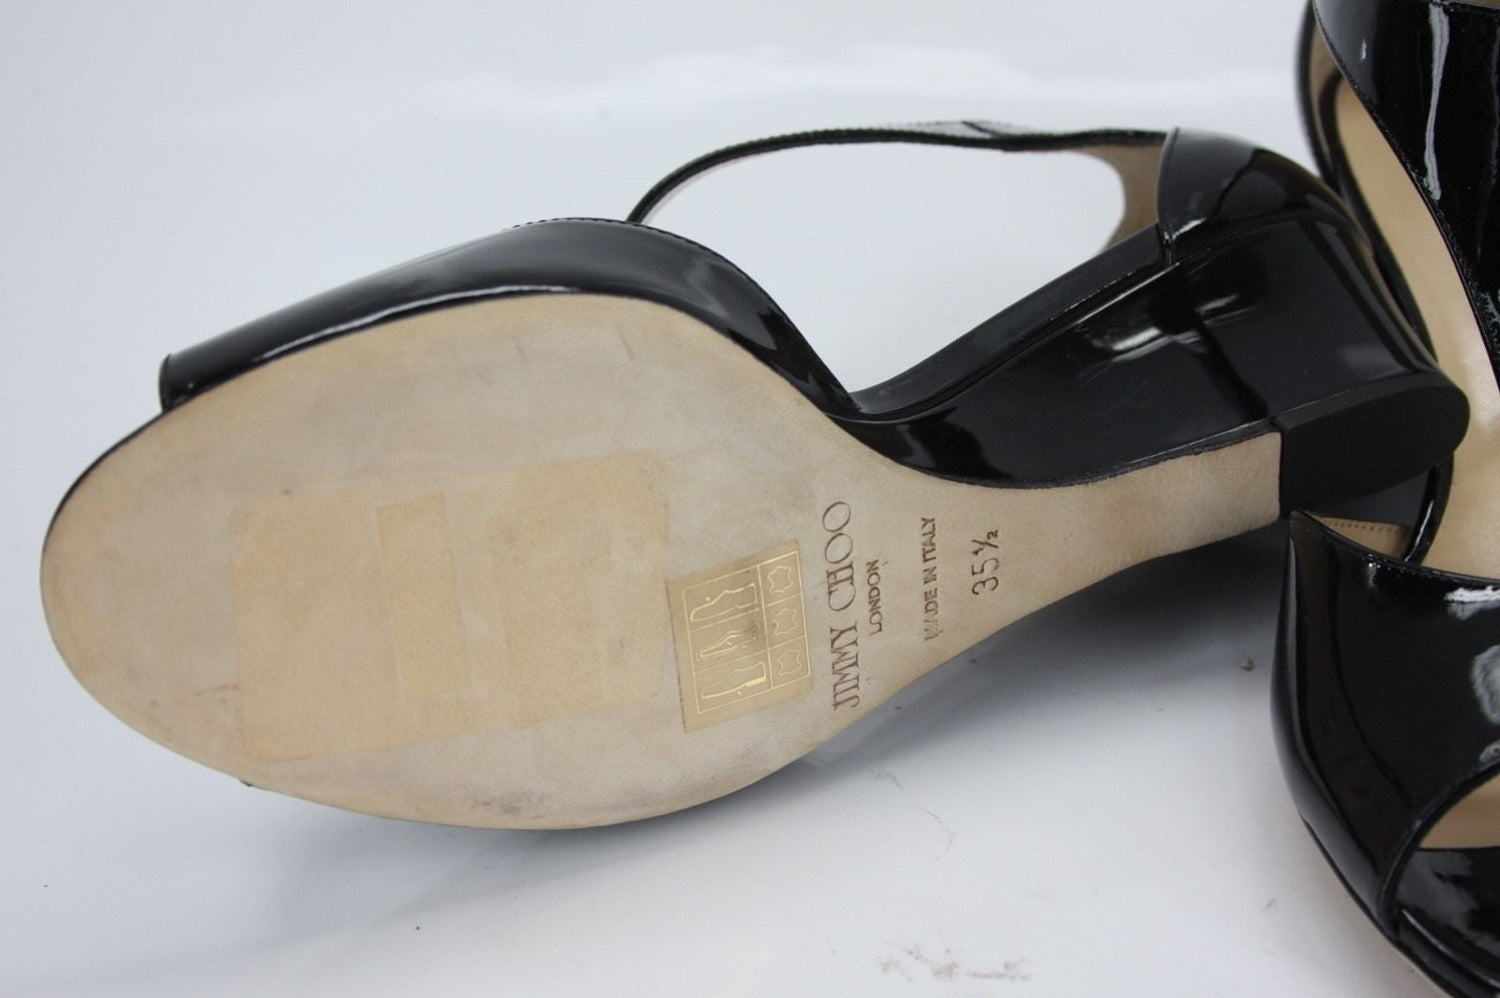 Jimmy Choo Black Patent Leather Treat T Strap Demi Wedge Sandal SZ 35.5 New $675